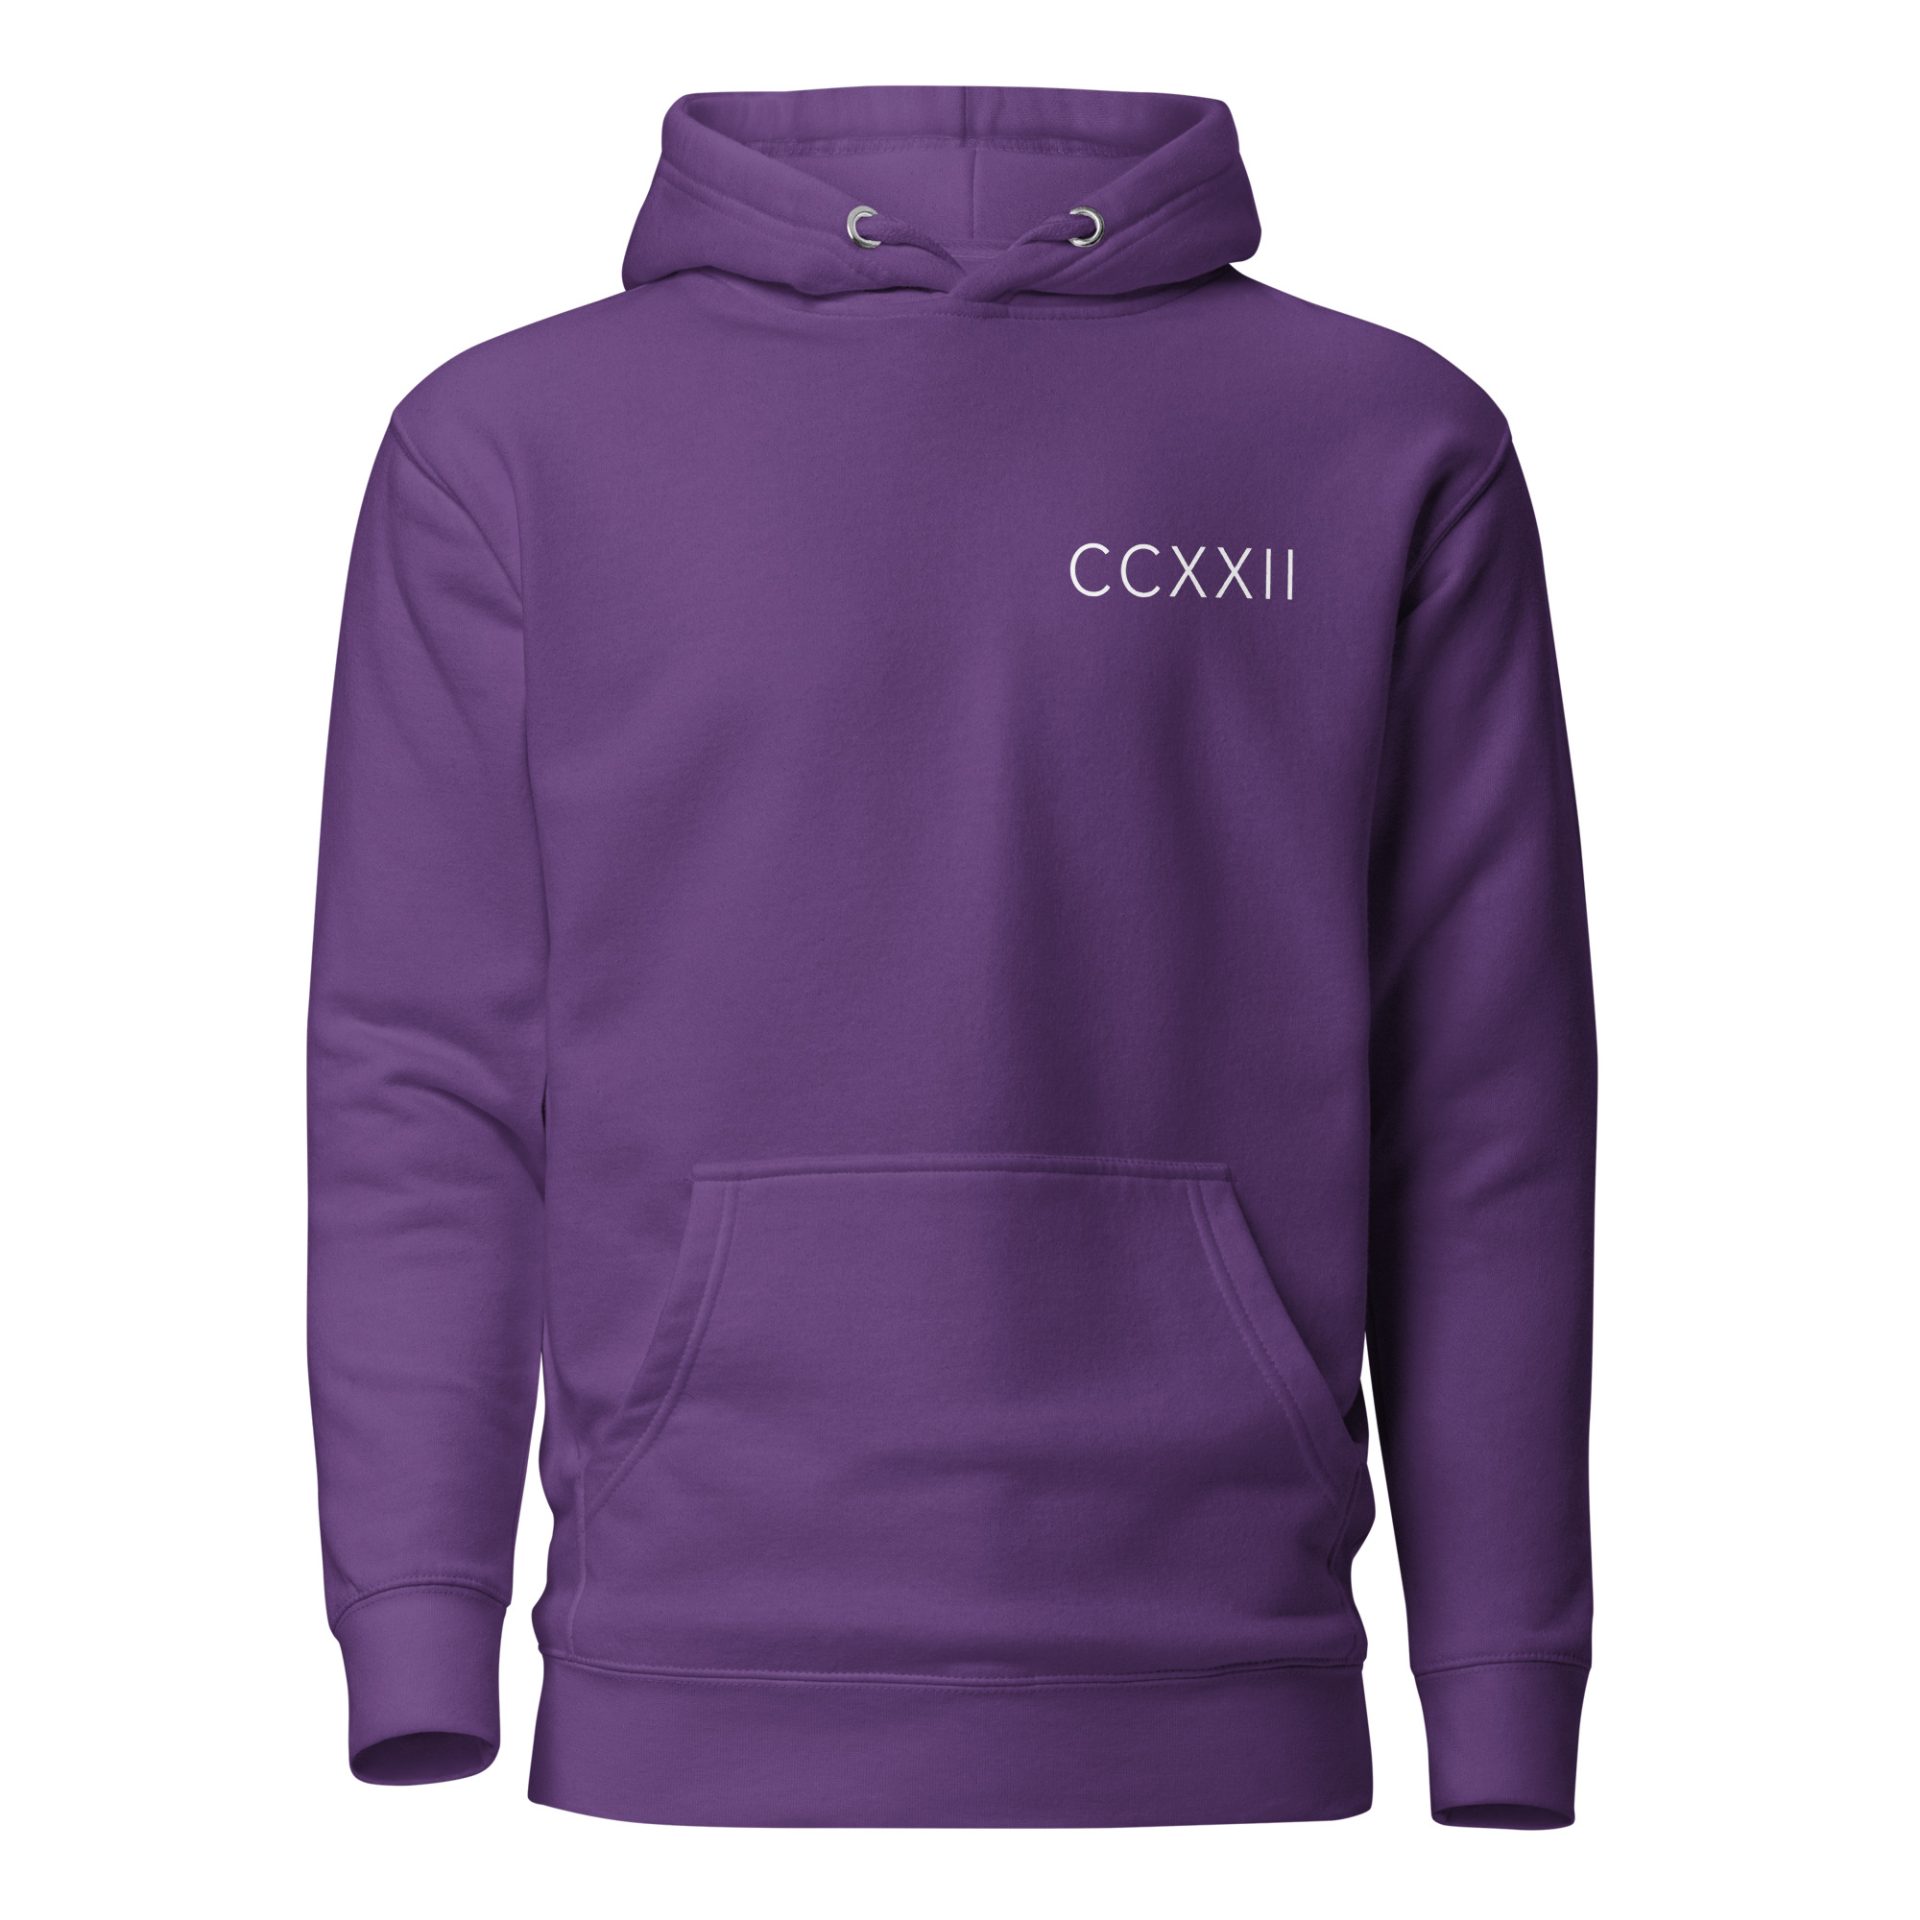 CCXXII Roman Numeral Printed Logo | Unisex Hoodie | Colors